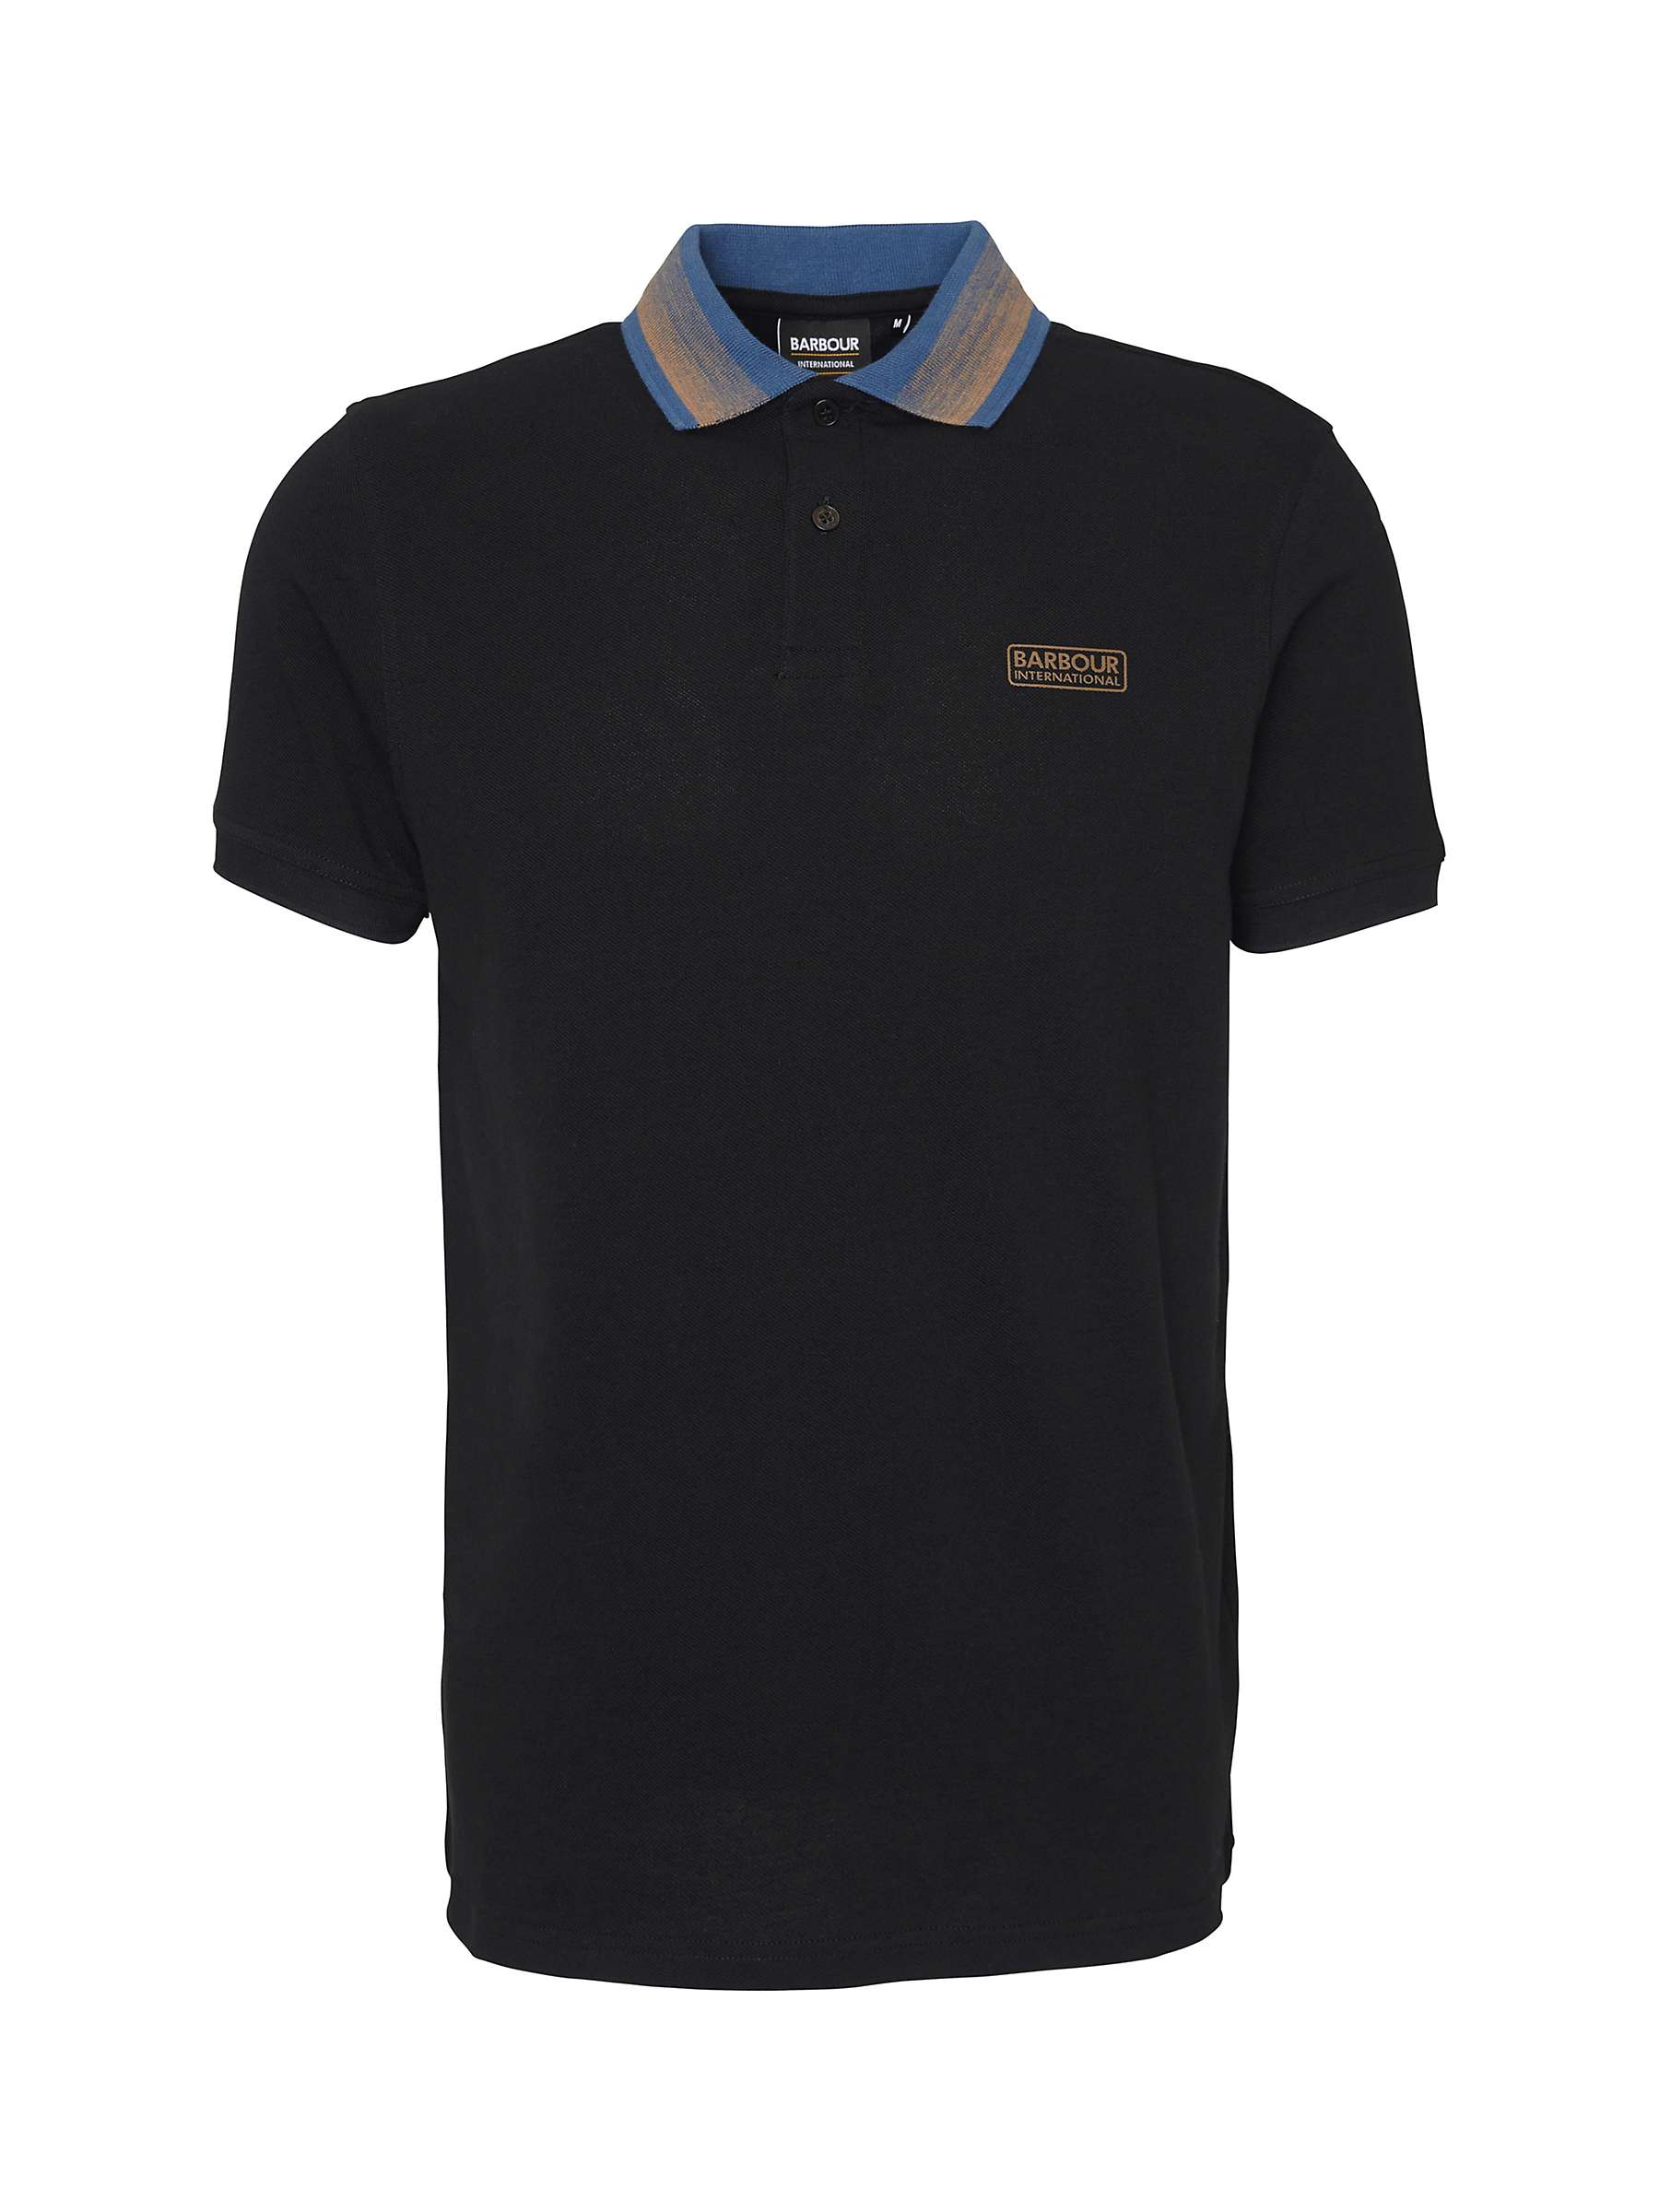 Buy Barbour International Gourley Polo Shirt, Black Online at johnlewis.com